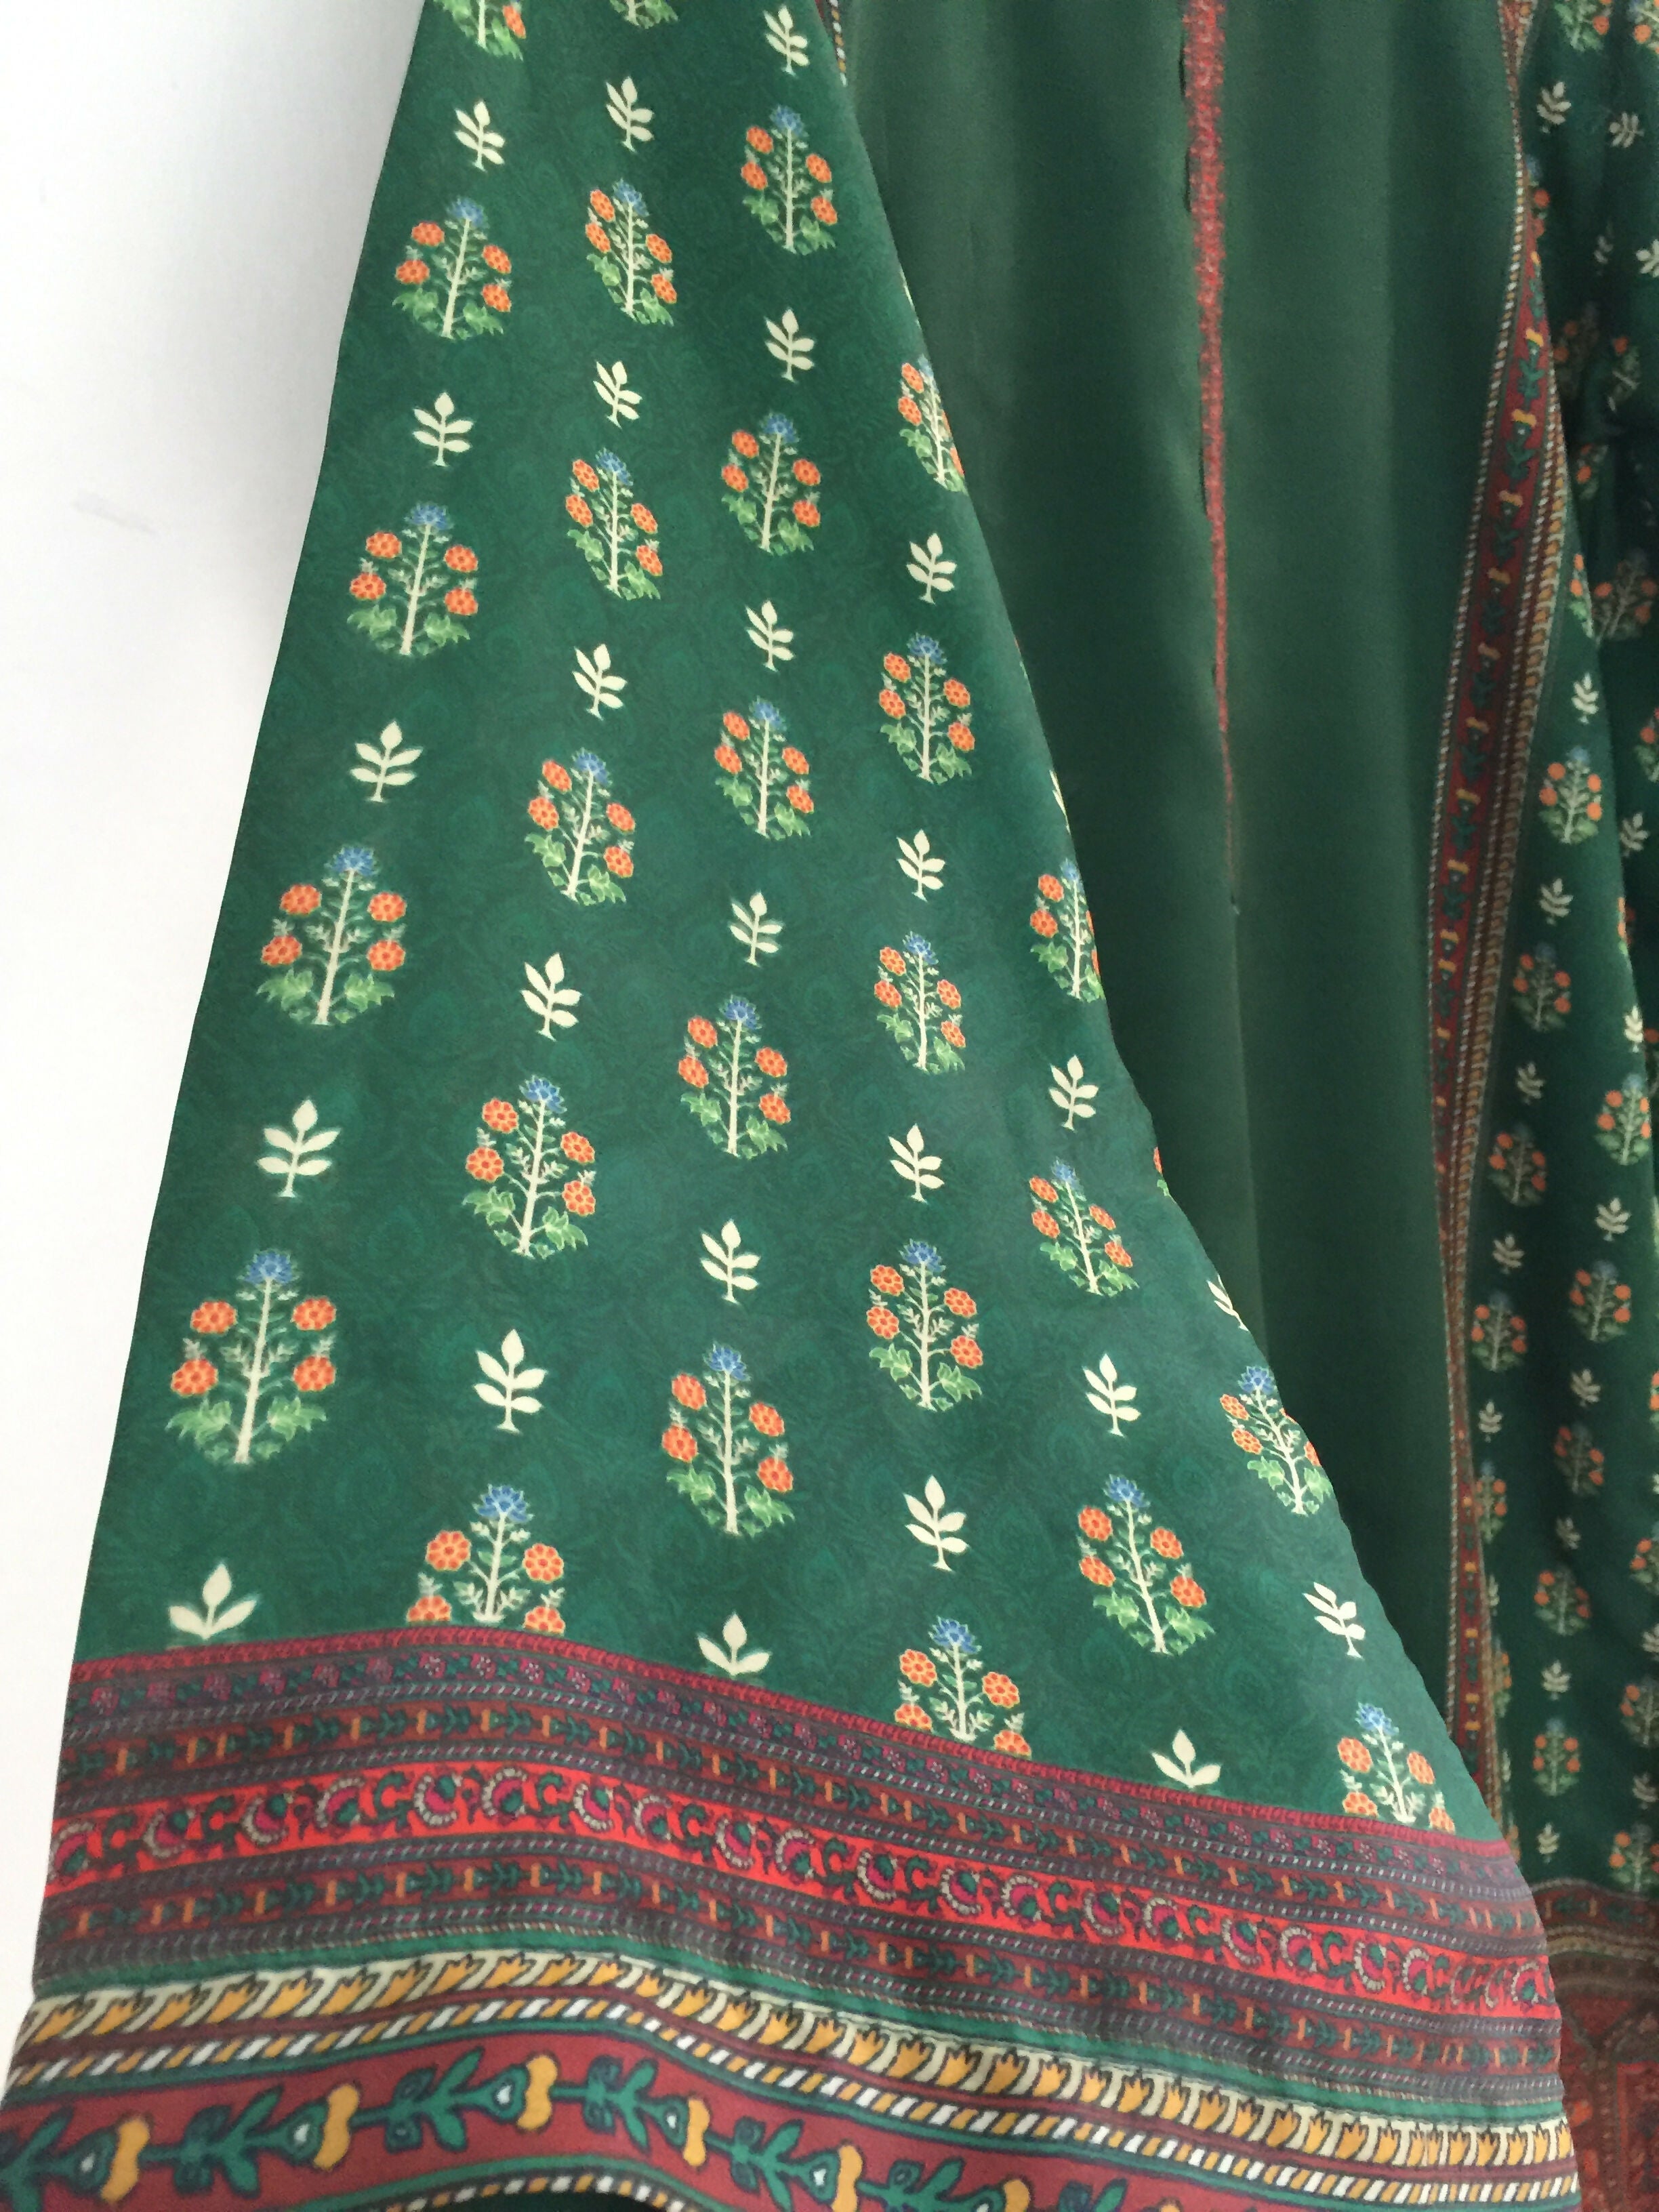 Green Silk Kurta | Women Locally Made Kurta | Medium | New